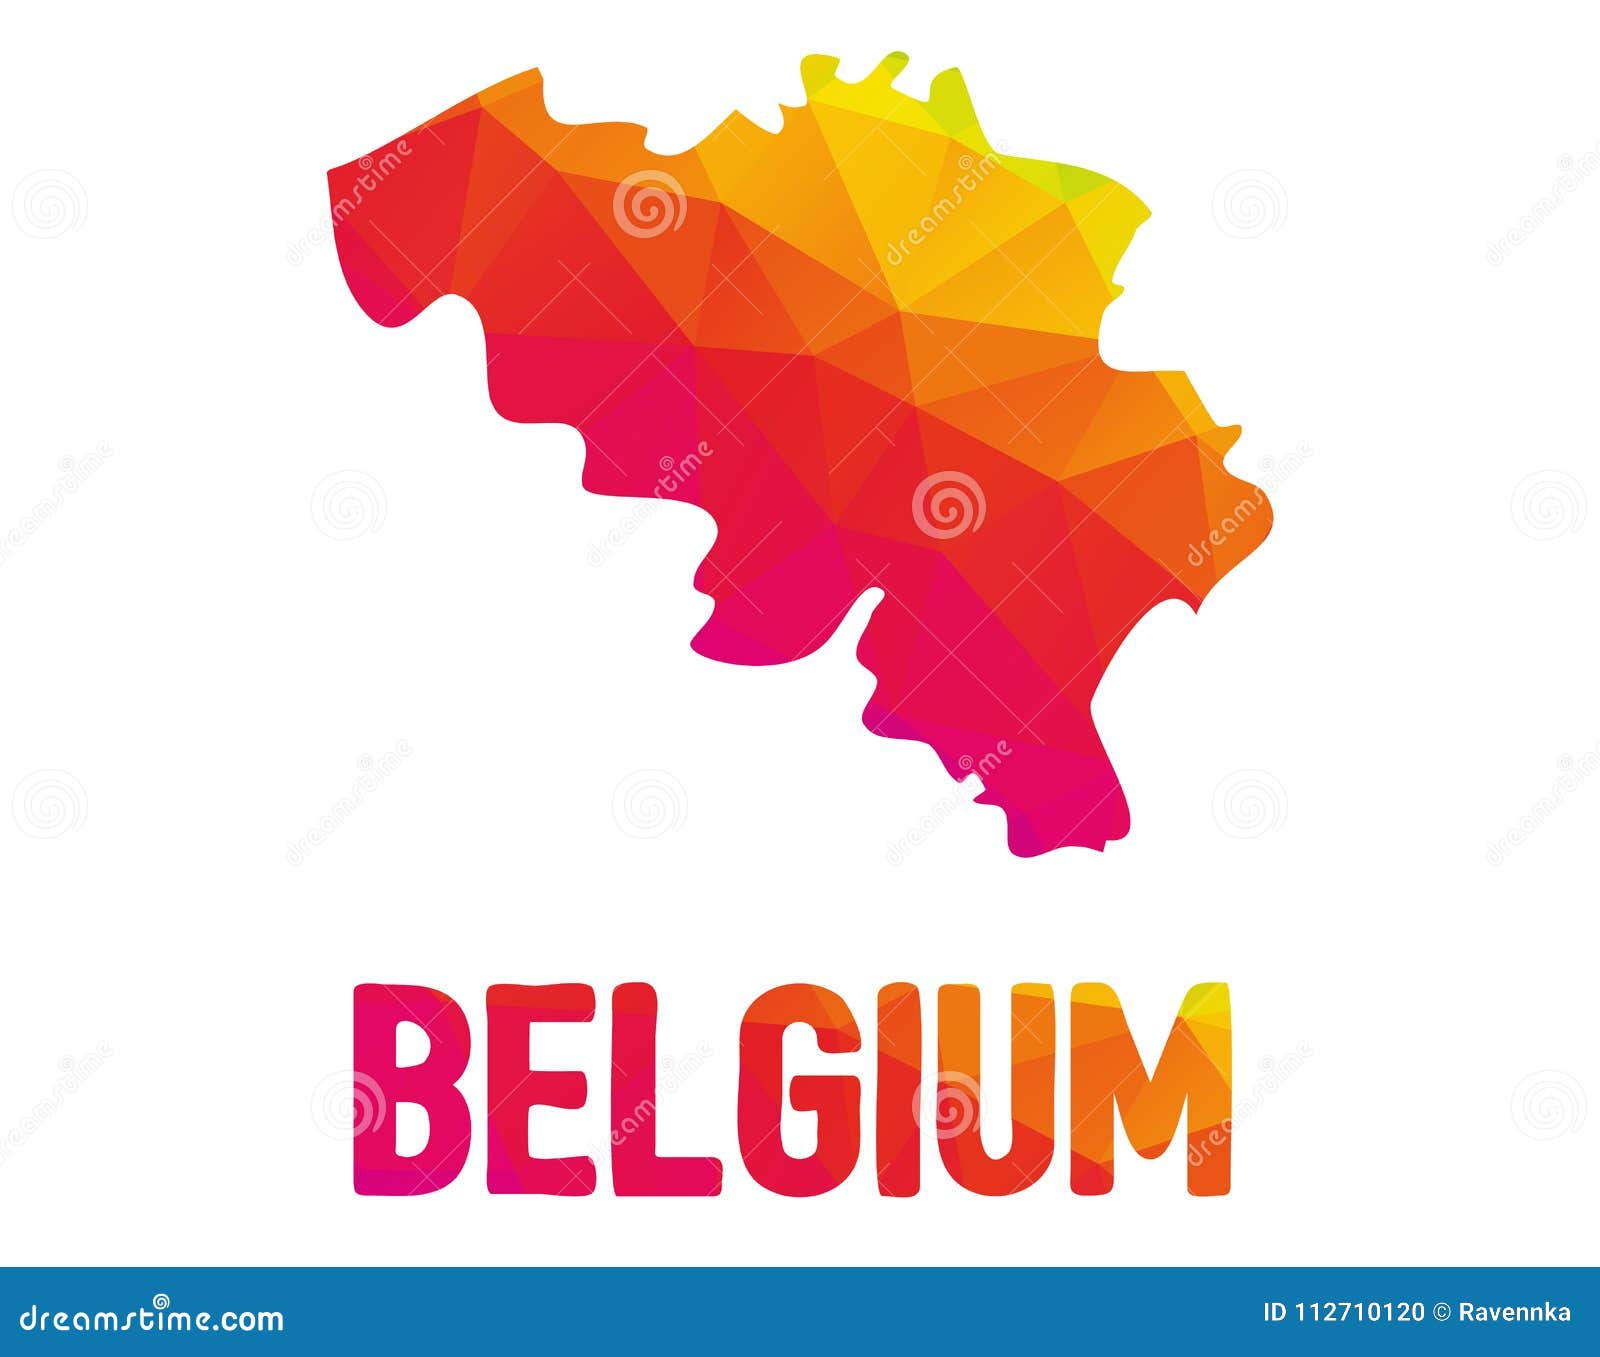 Low Polygonal Map Kingdom Belgium Belgium Belgium T Low Polygonal Map Kingdom Belgium Belgium Sign Belgium 112710120 